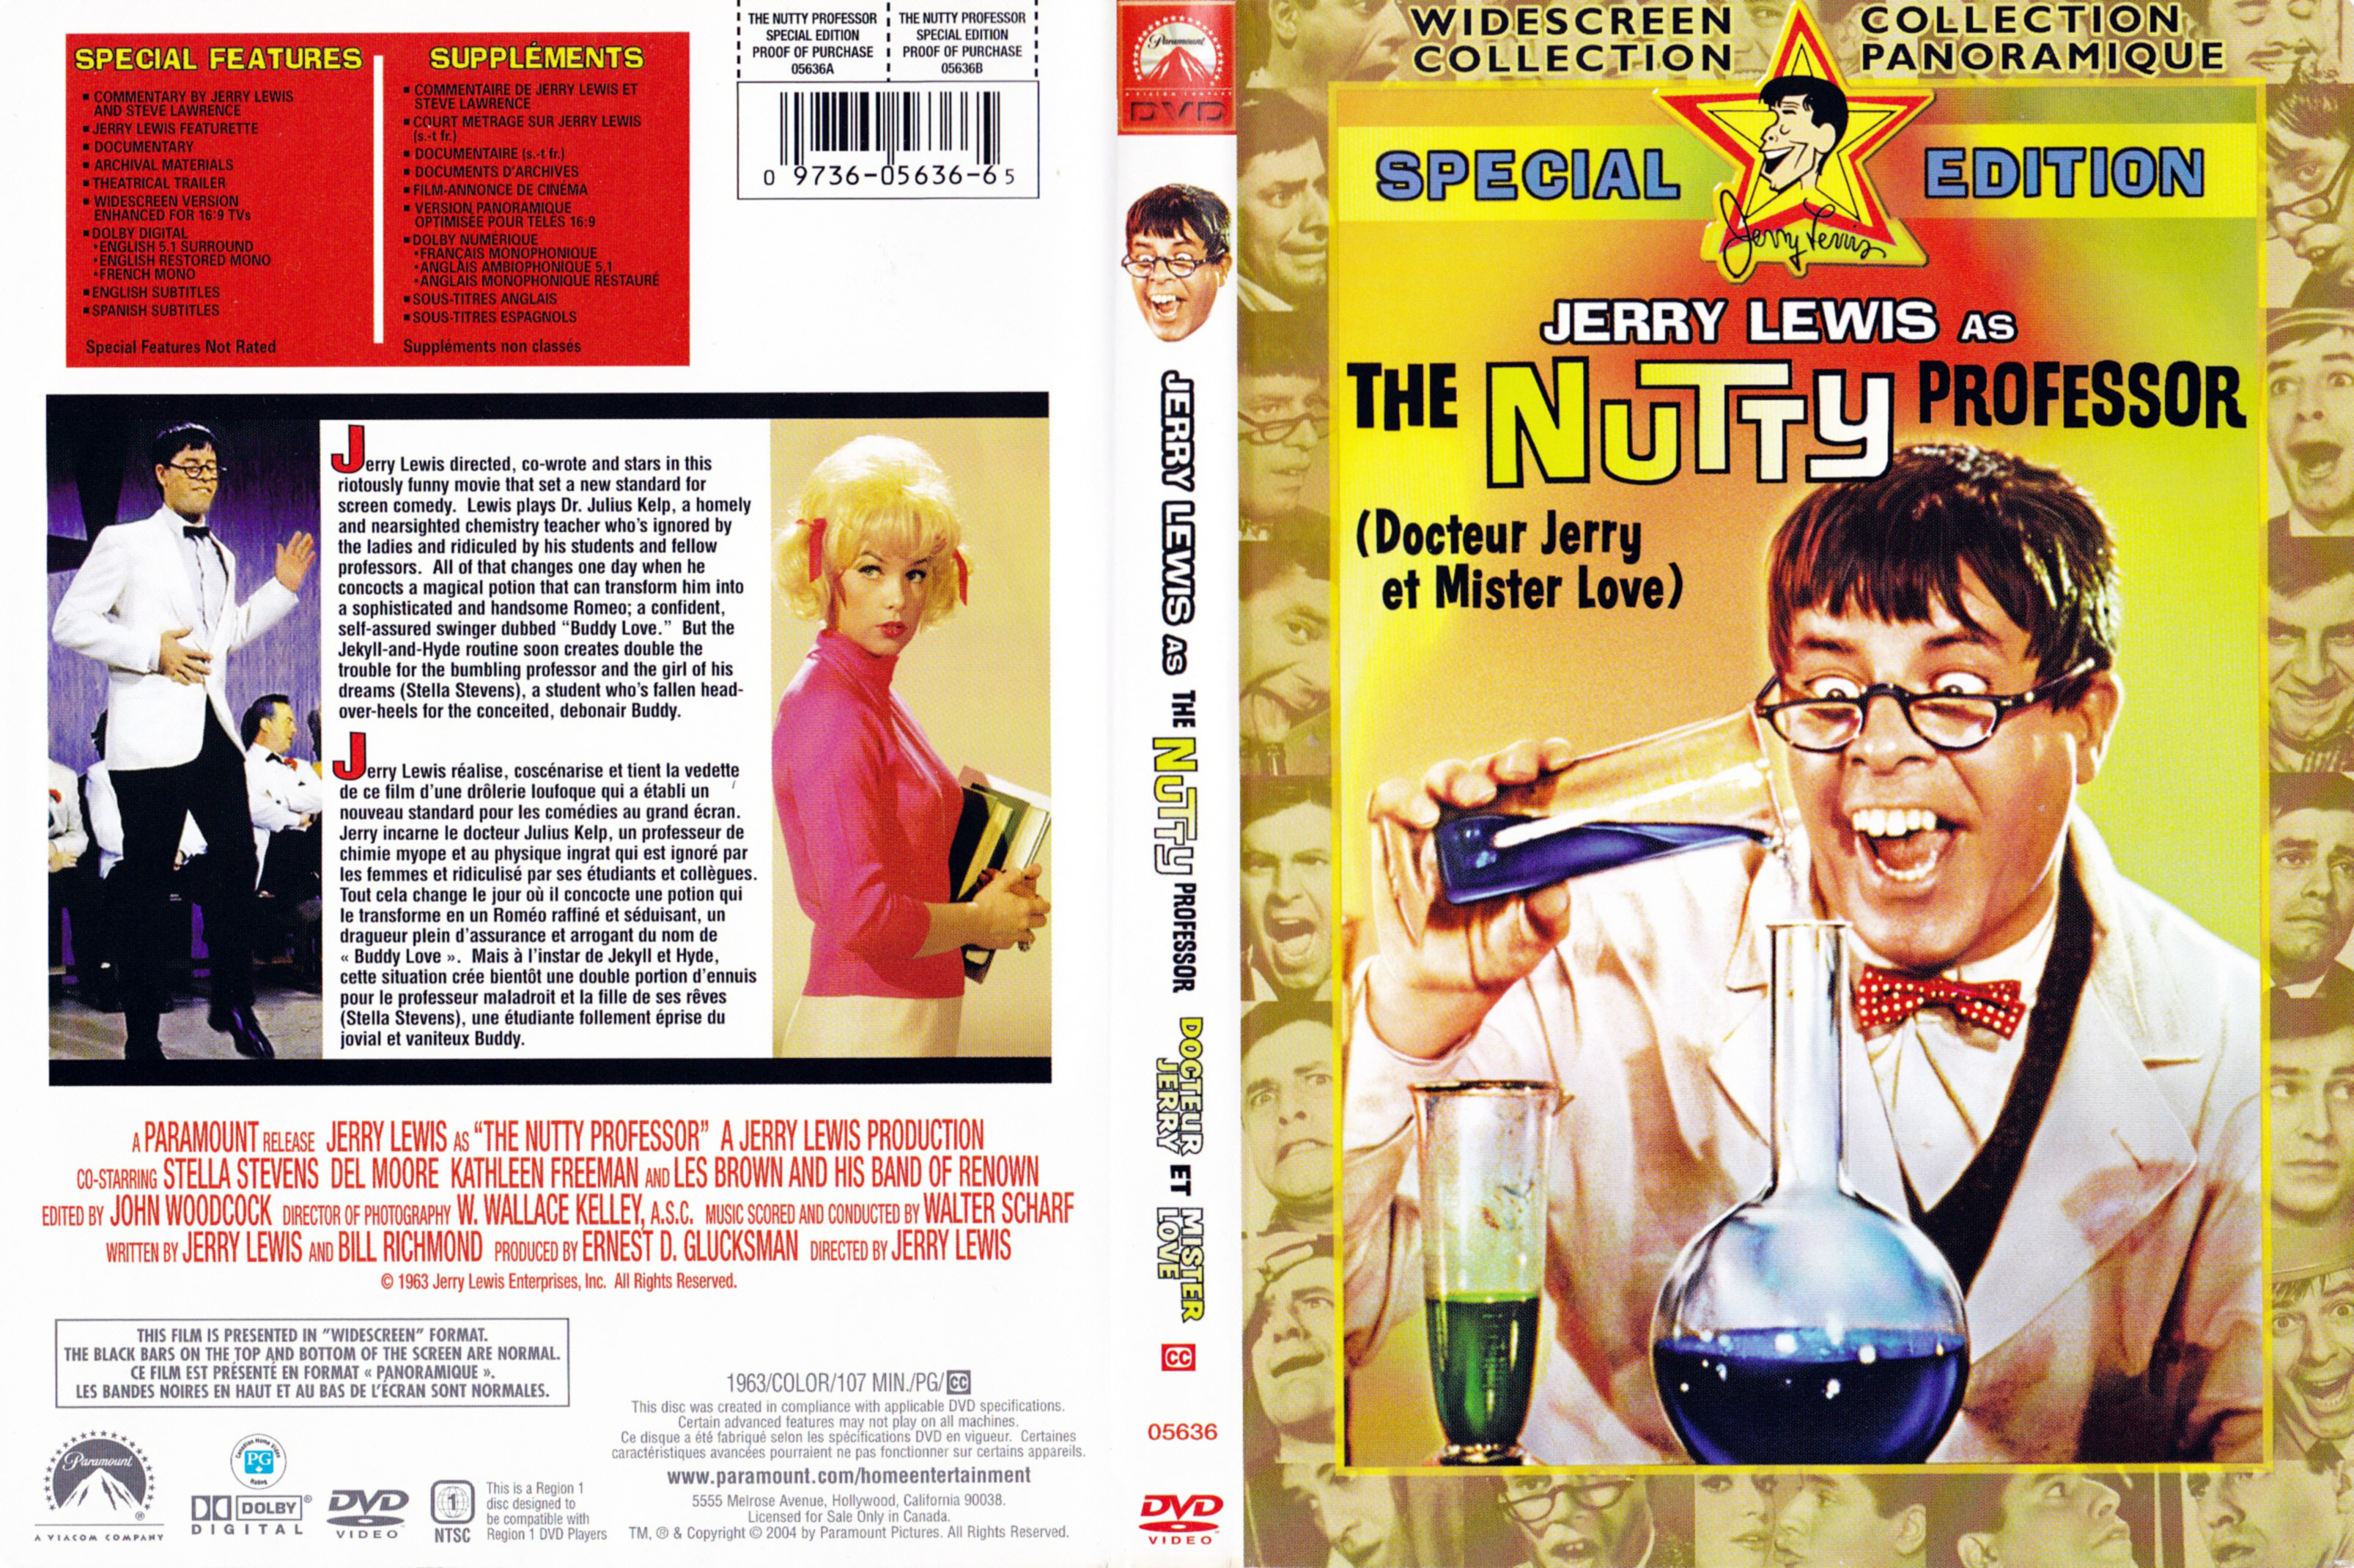 Jaquette DVD Docteur Jerry et Mister love - The nutty professor (Canadienne)